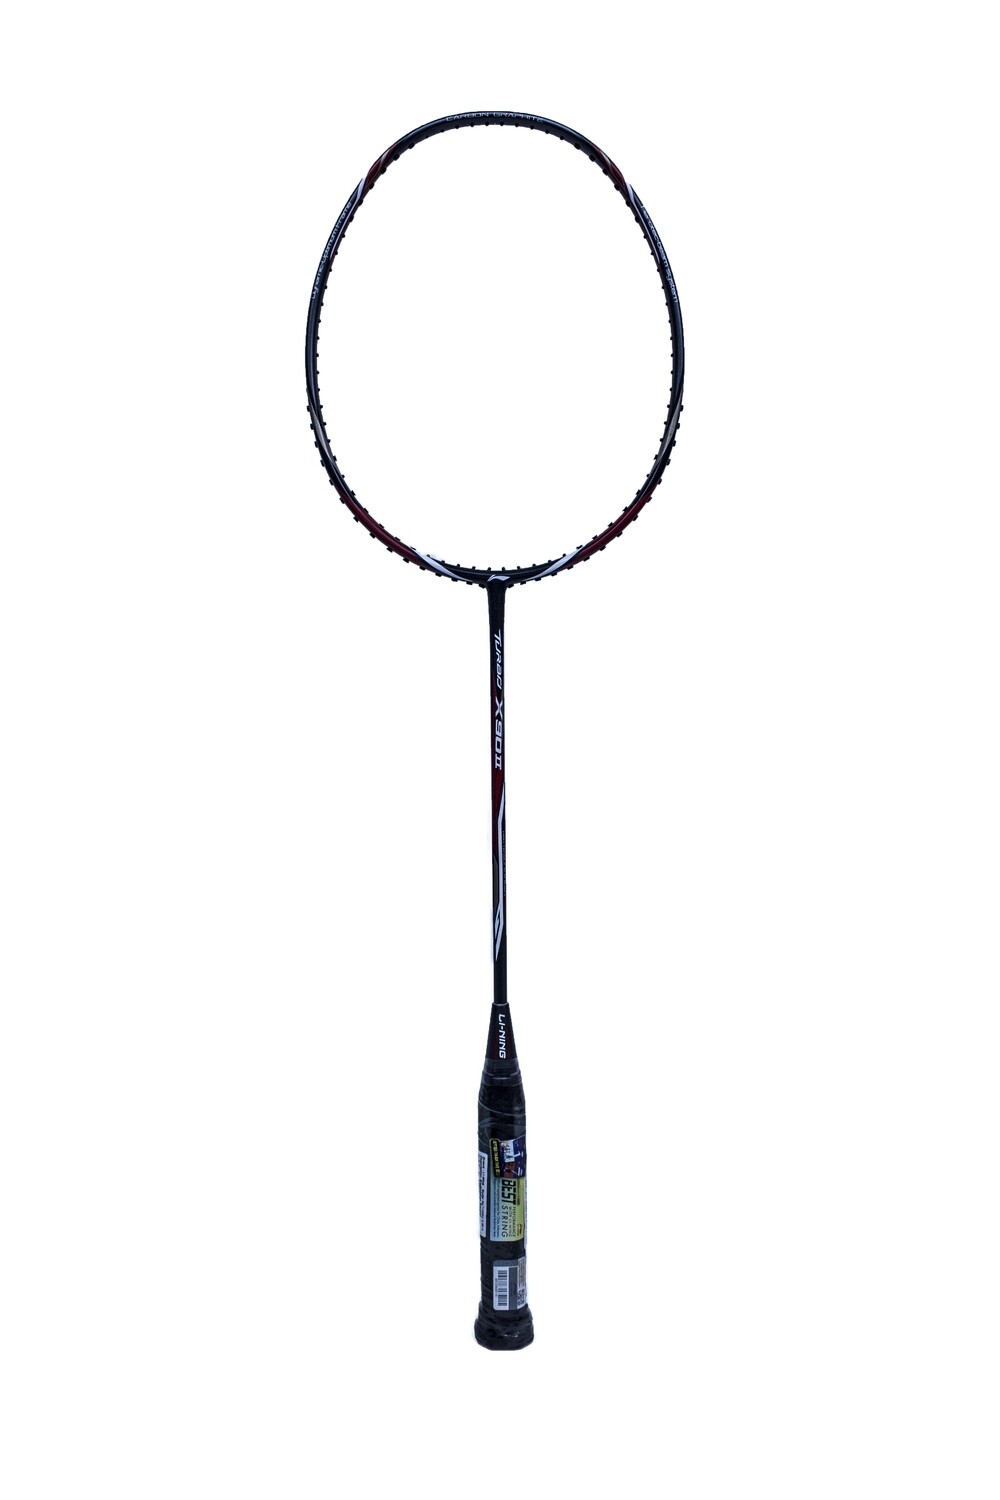 LI-NING Turbo X90 II Badminton Racquet -